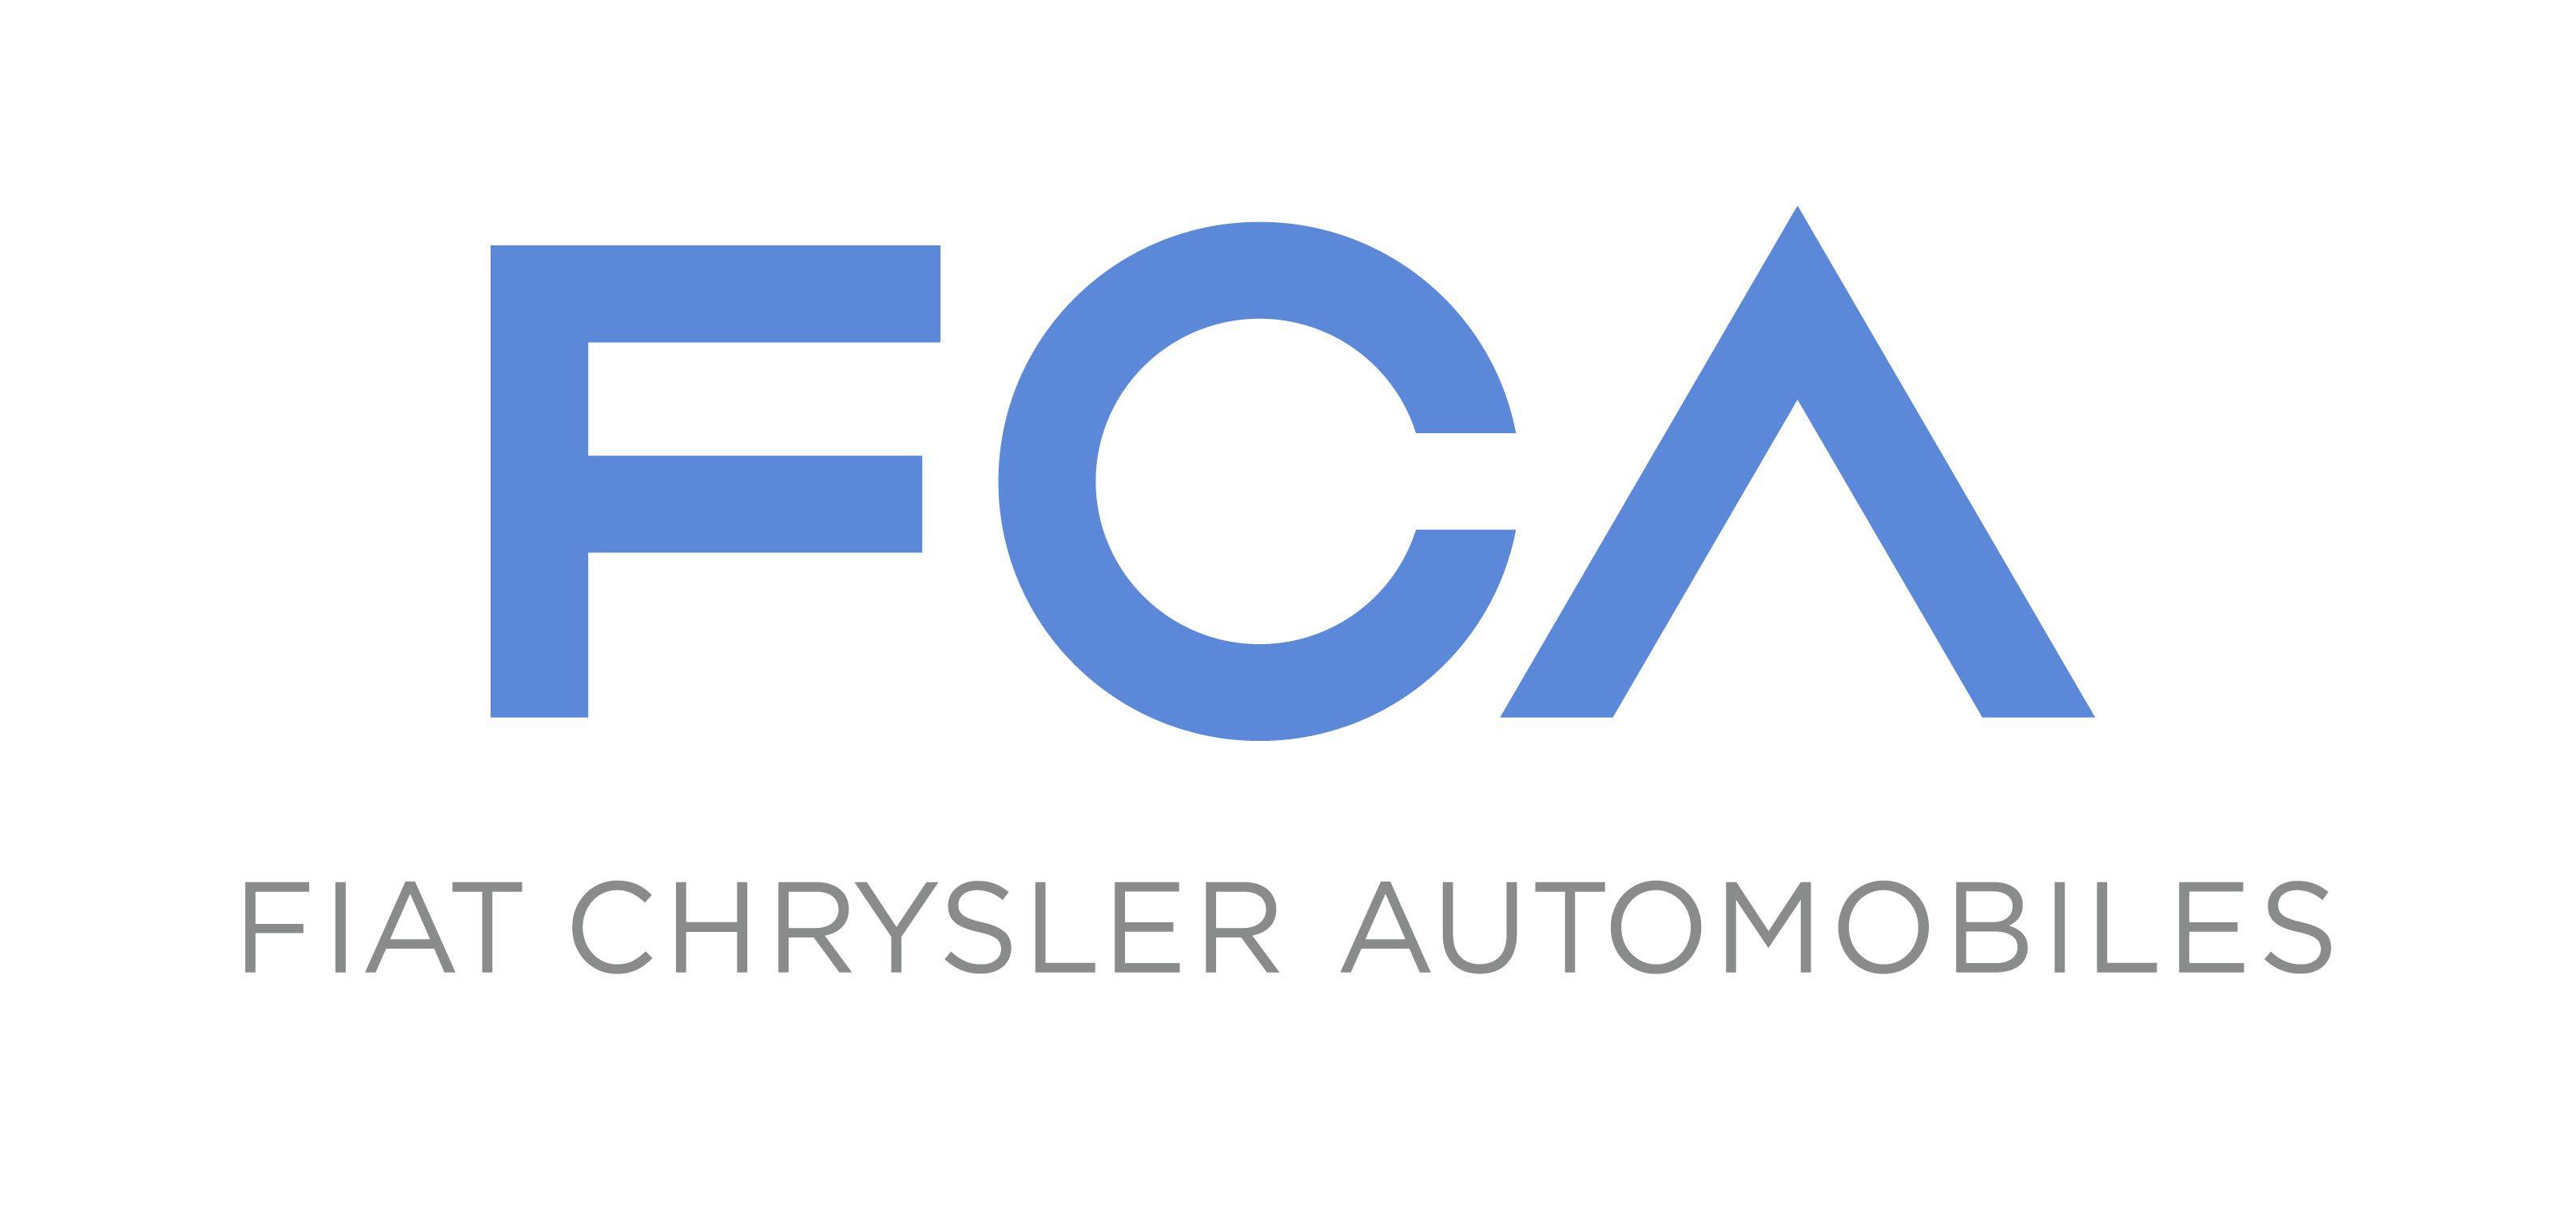 Chrysler FCA Logo - New Fiat Chrysler Automobiles Logo Links the Automakers | Economic ...